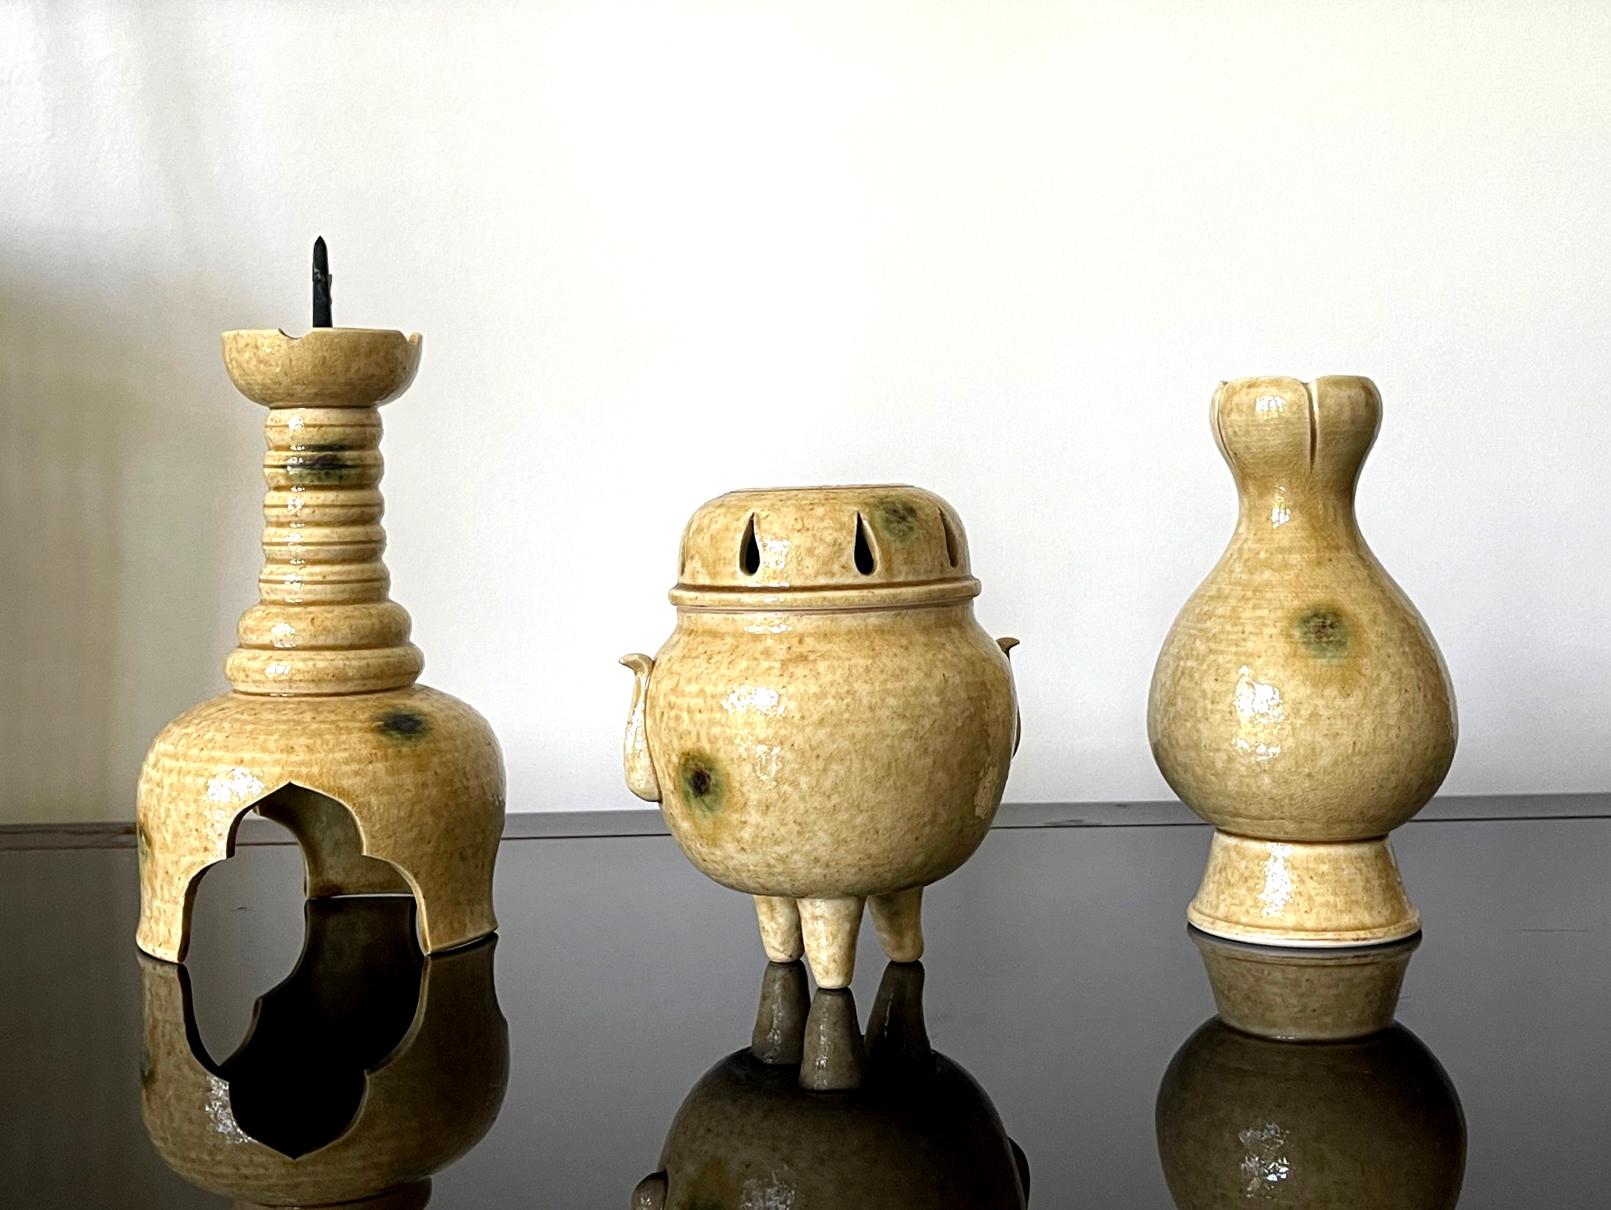 Glazed Set of Ki-Seto Ceramic Altar Pieces from Korean Empire Period For Sale